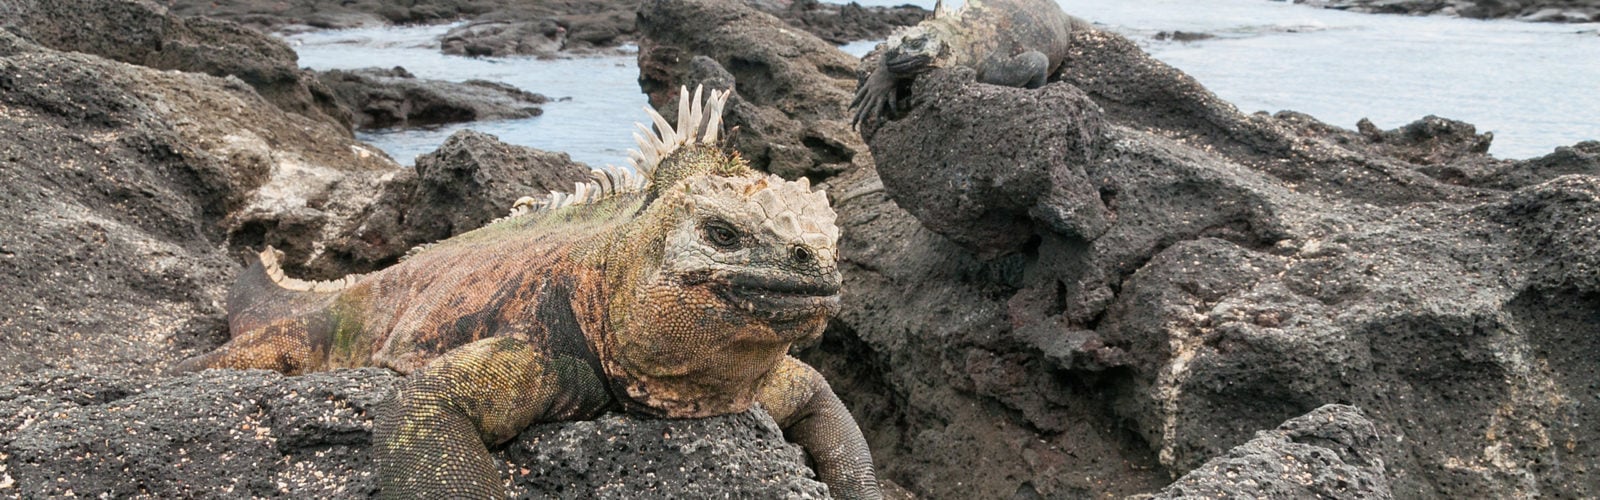 Galapagos marine iguana on a rocky outcrop